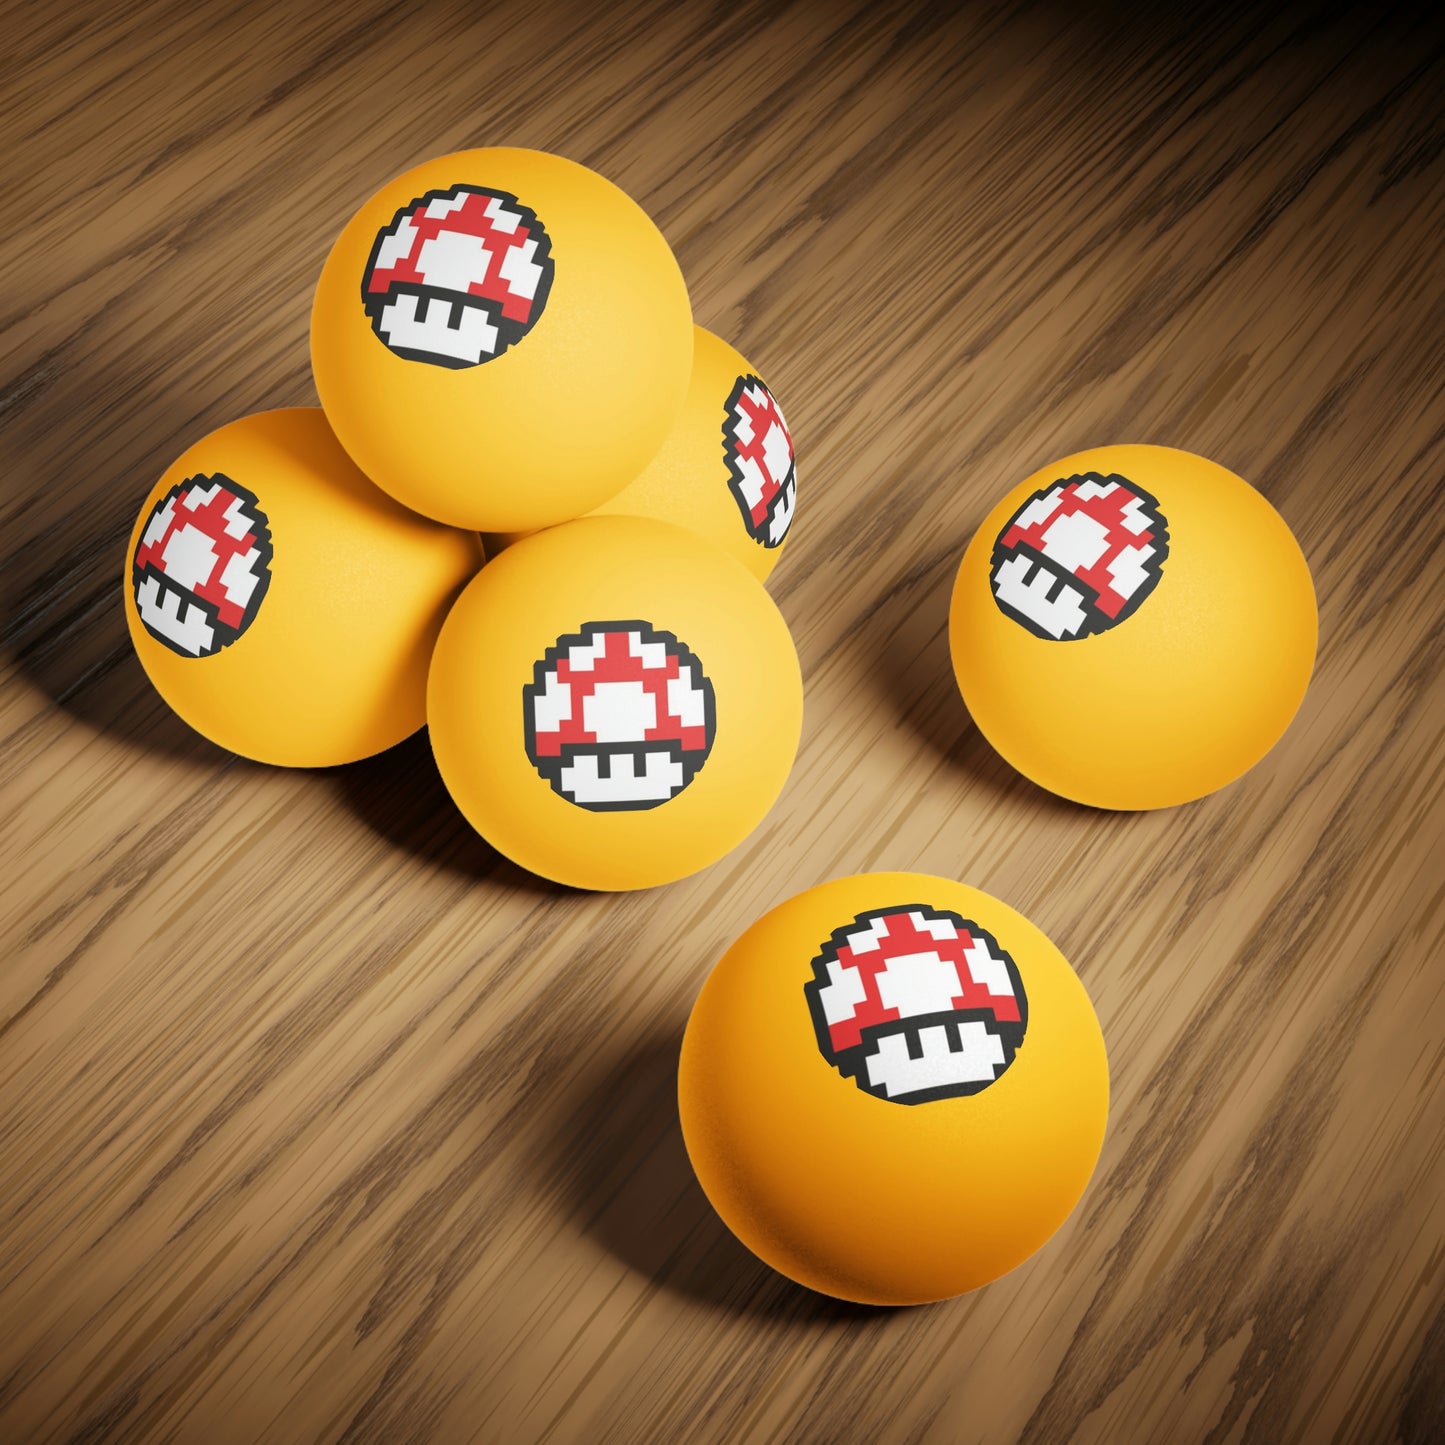 Red Mushroom 8 Bit Style Ping Pong Balls, 6 pcs